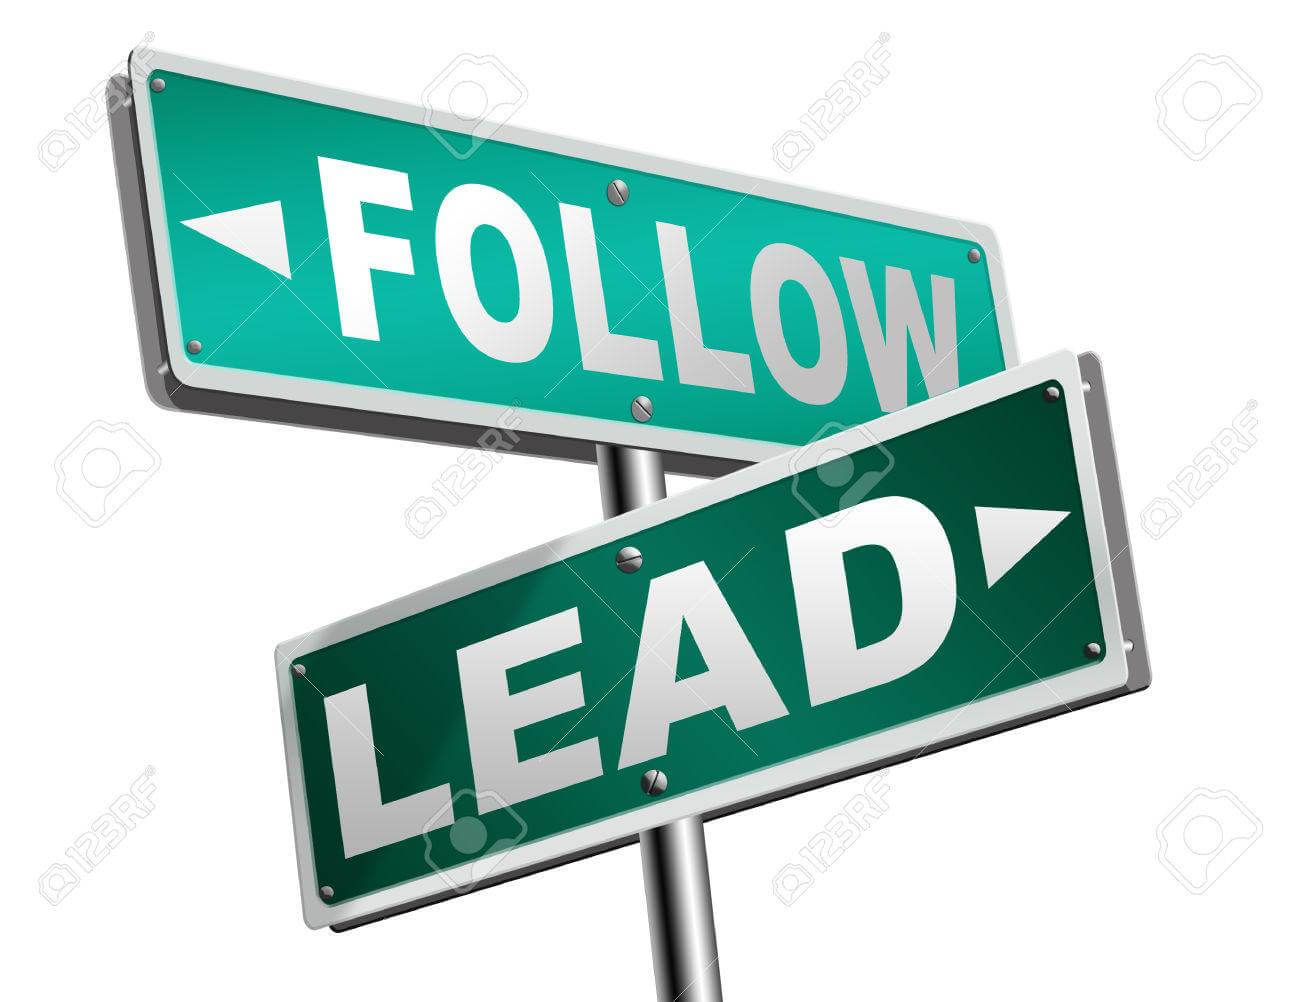 follow or lead